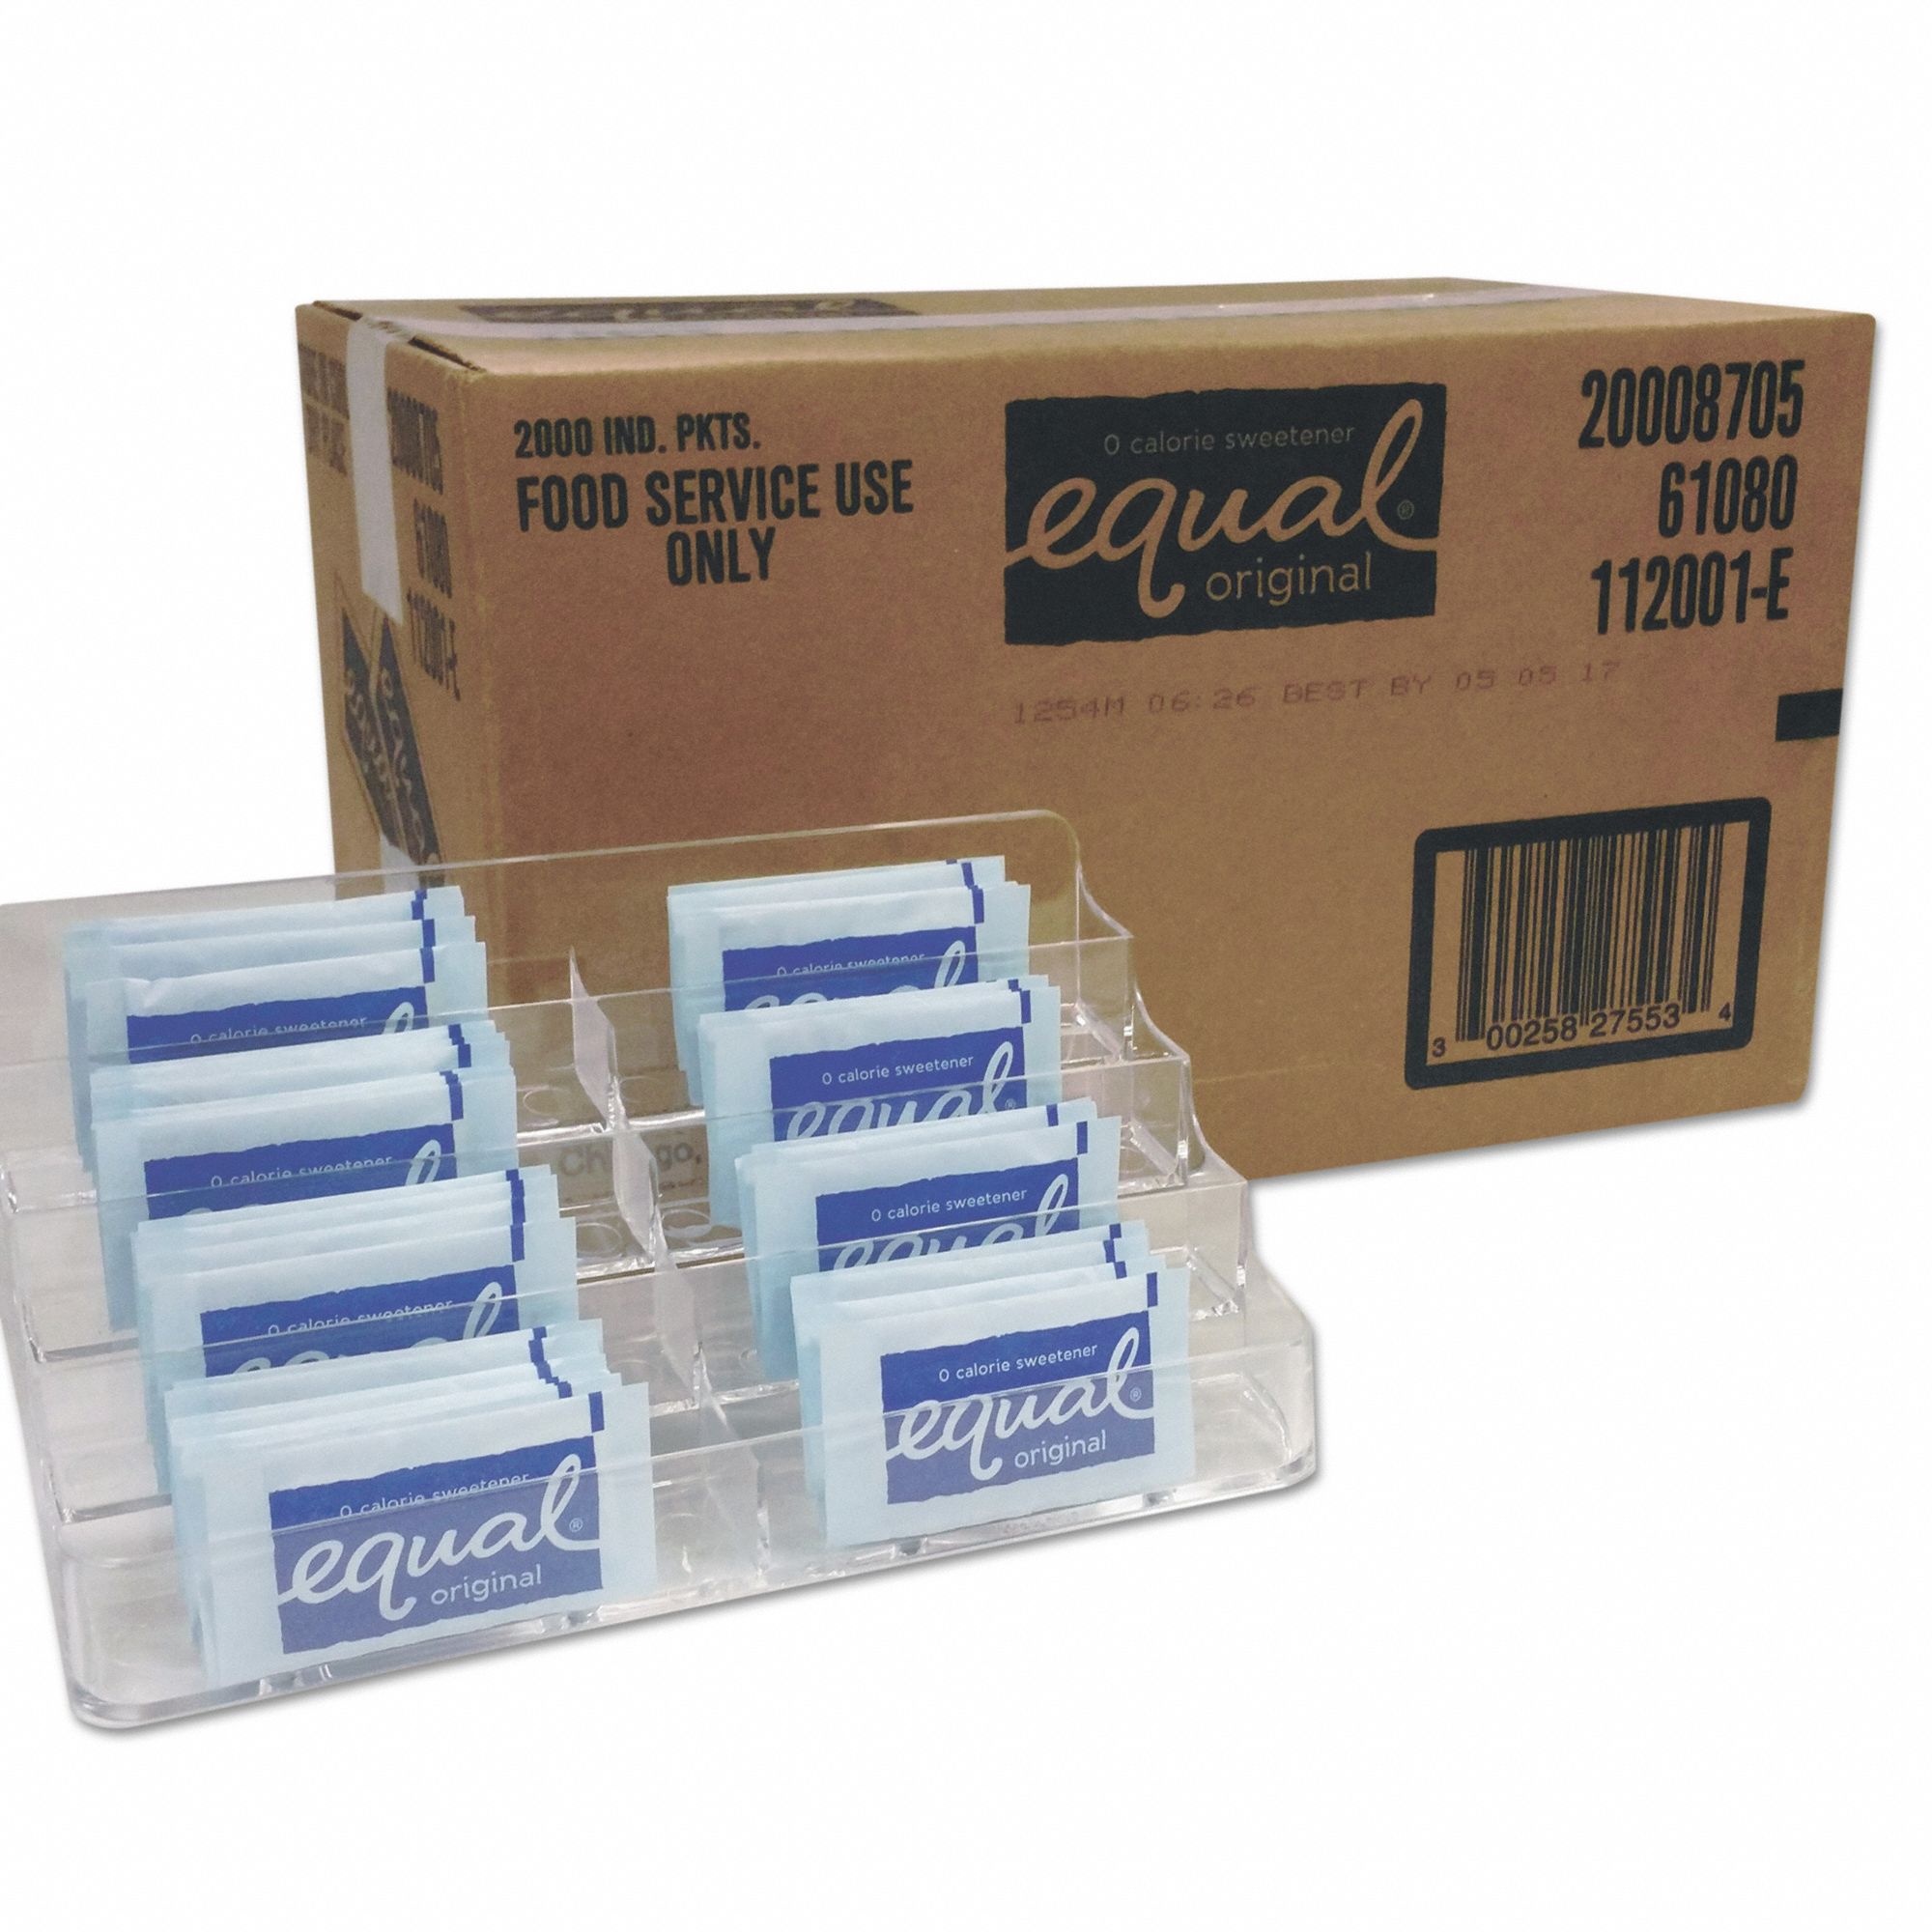 Equal: Aspartame, 0.04 oz Item Size, Packet, 2,000 Pack Count, Pack per Case